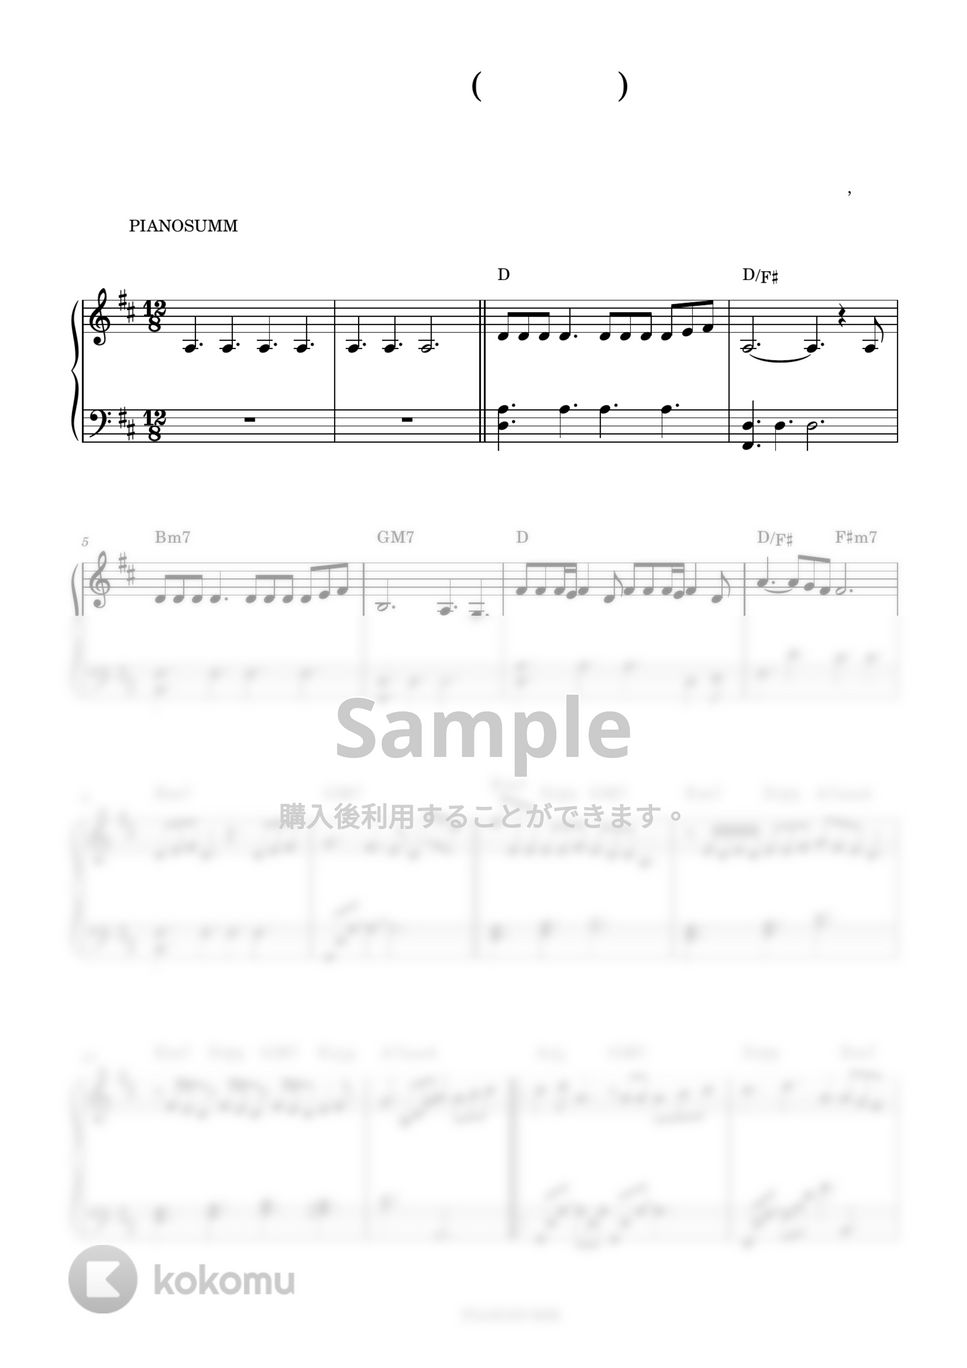 IU(아이유) - Dear Name(이름에게) (Easy ver) by PIANOSUMM